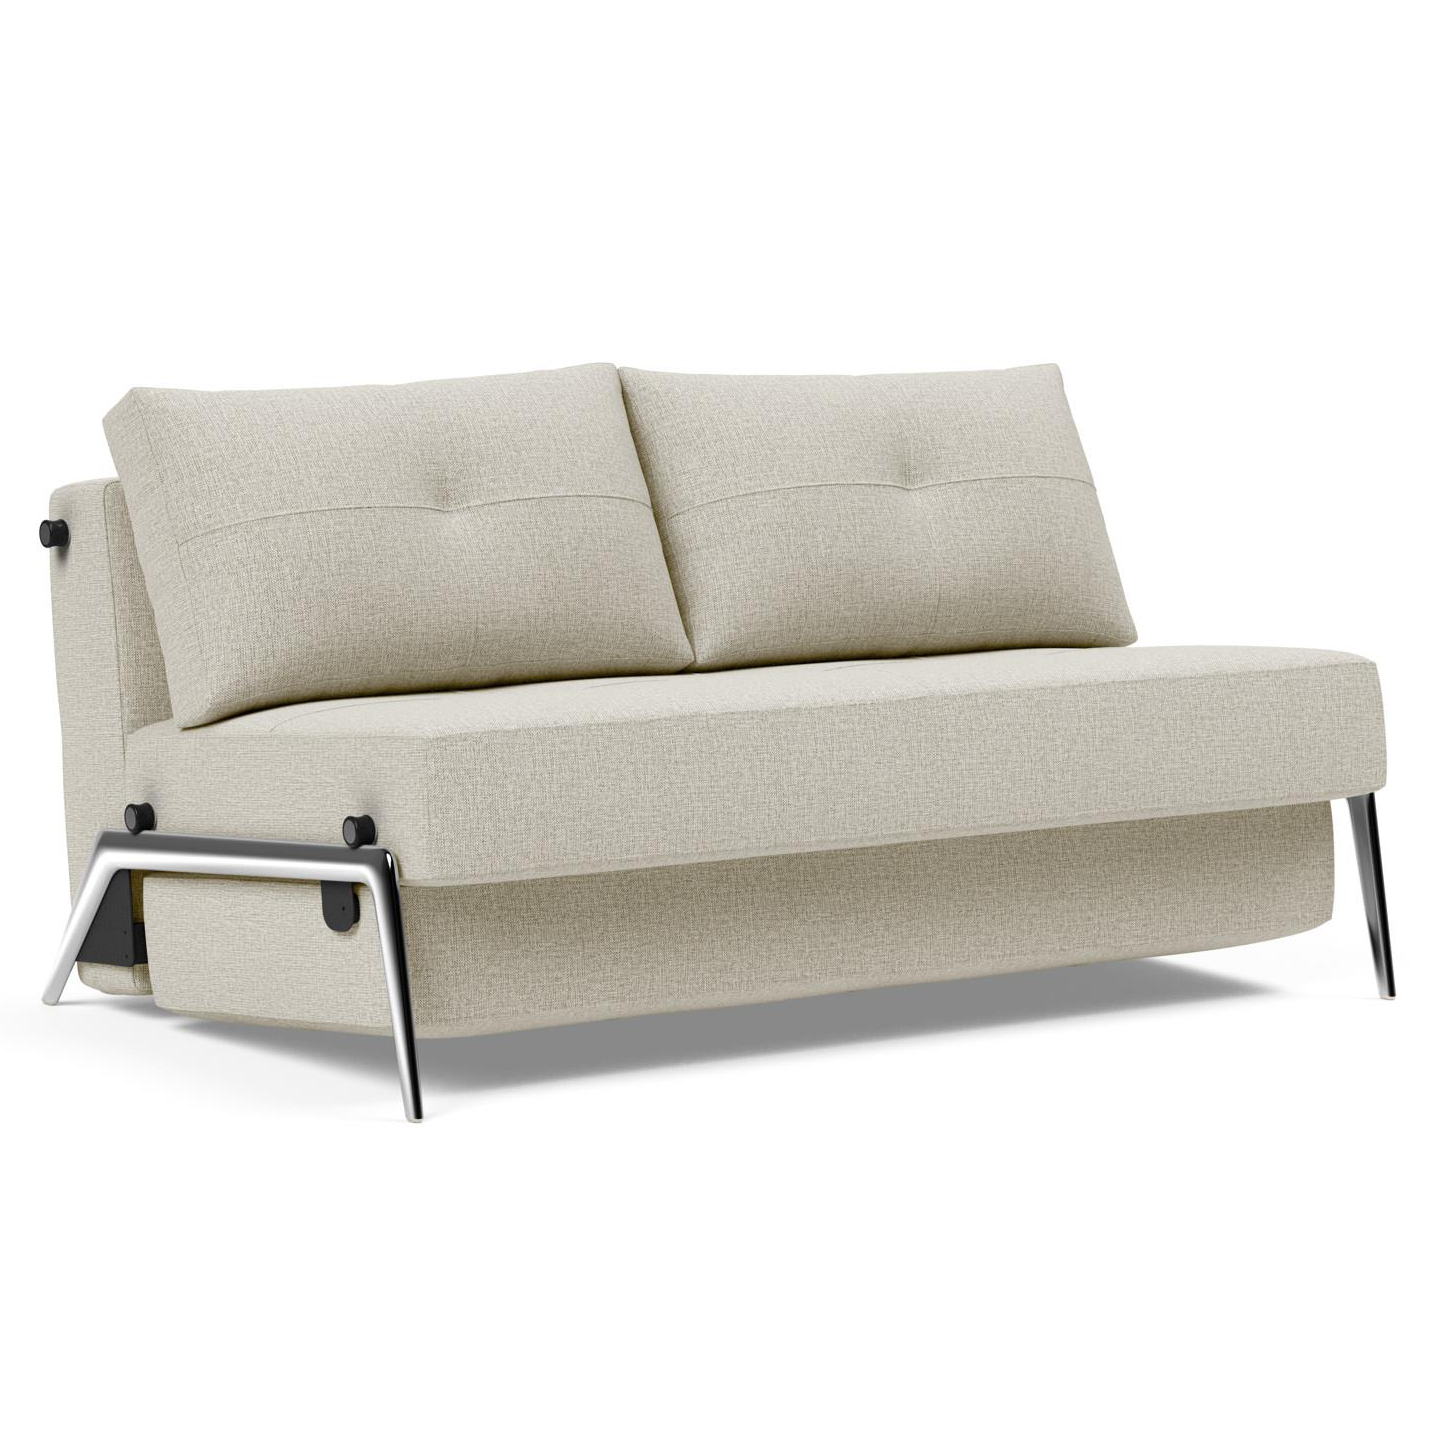 Cubed Full Size Sofa Bed With Aluminum Legs